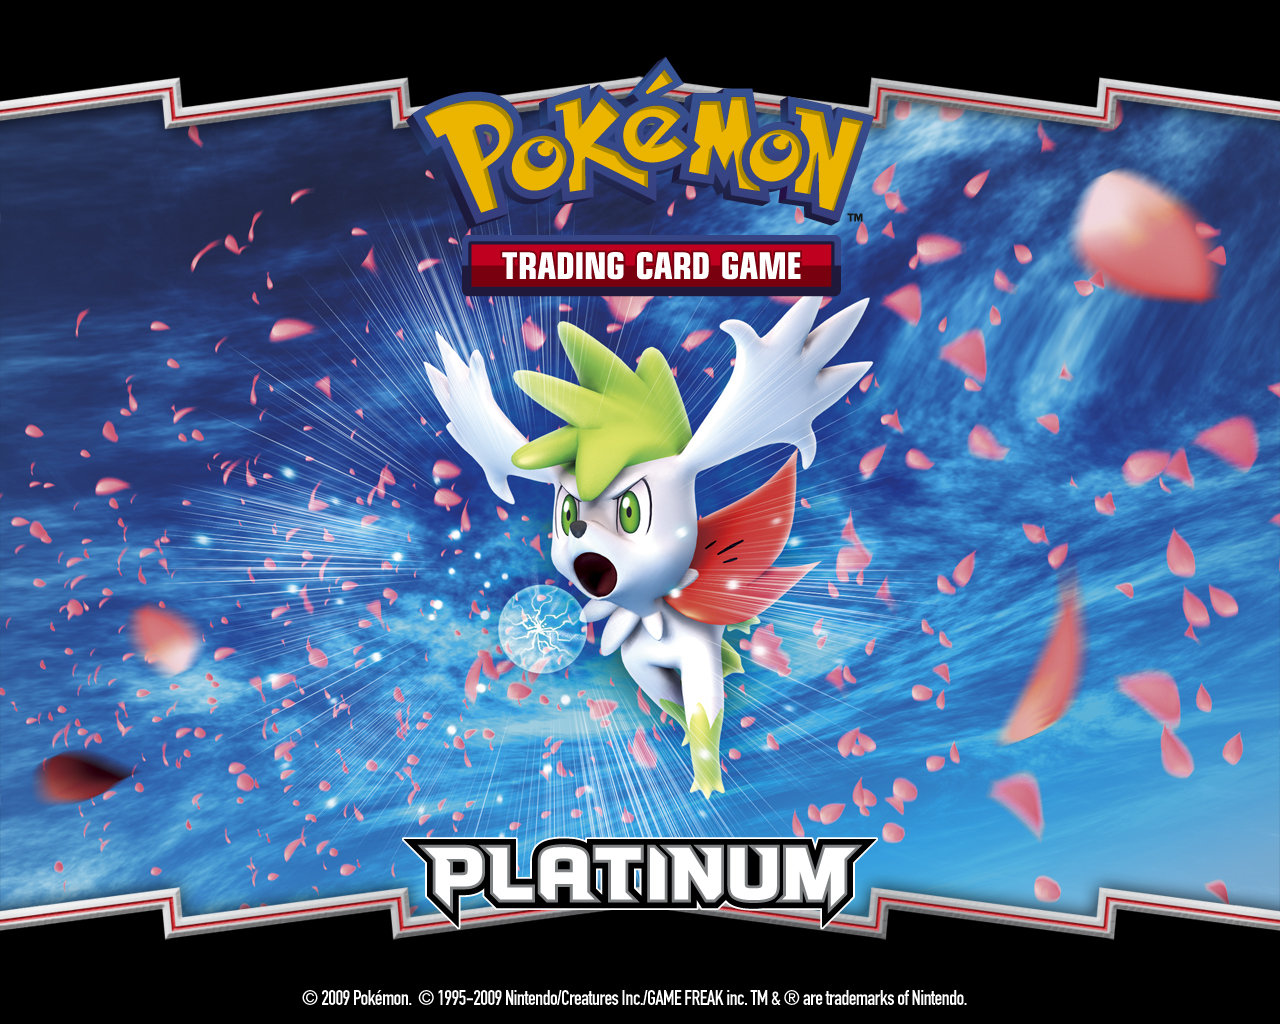 Free Download Pokemon Cards Wallpaper Id - Pokemon Trading Card Game Platinum - HD Wallpaper 